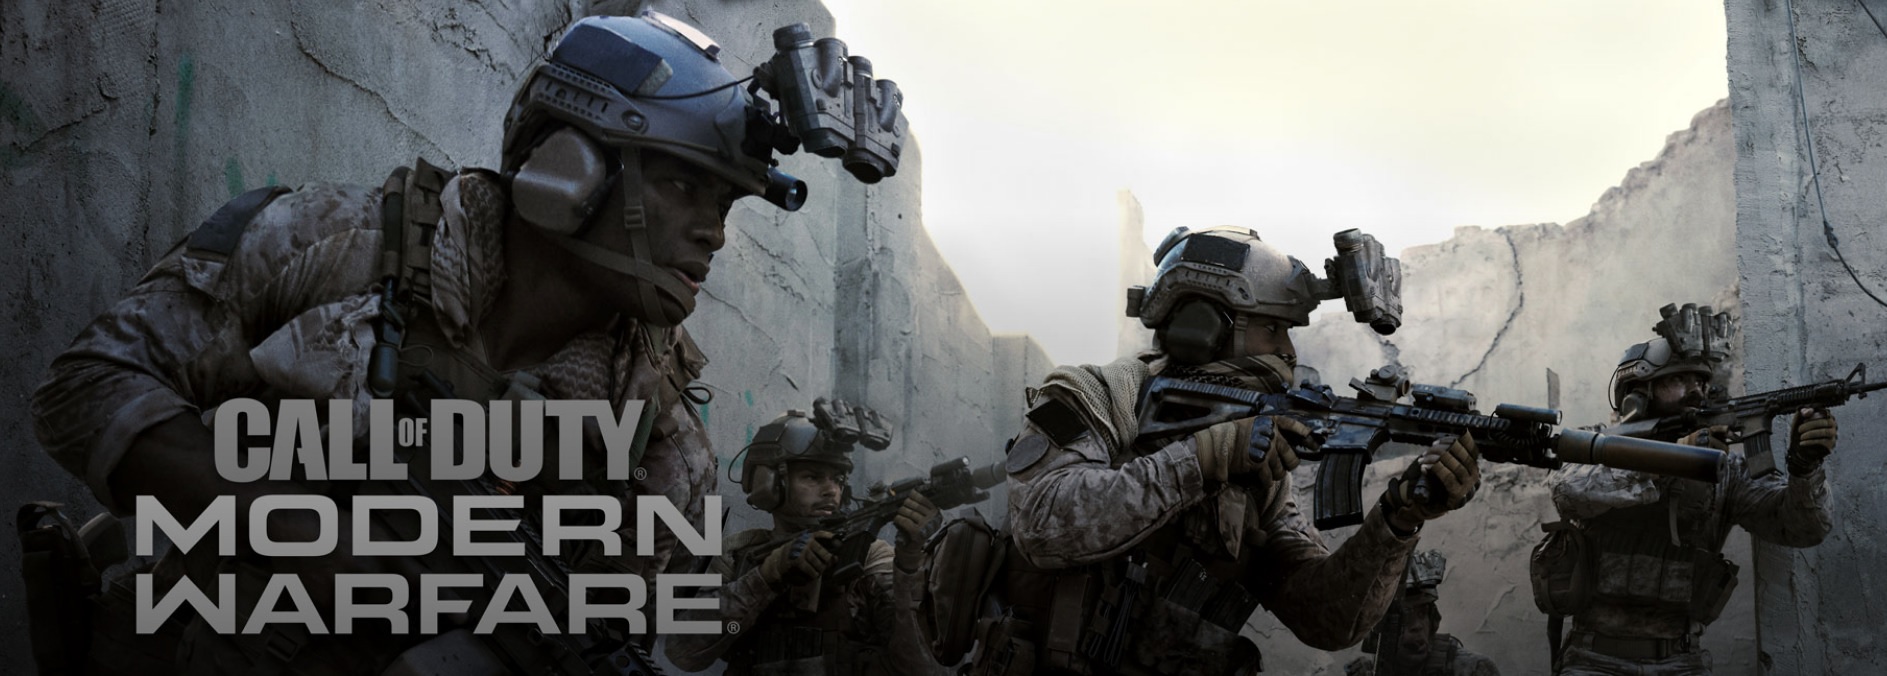 Pc版 Call Of Duty Modern Warfare 安く買えるストアを紹介